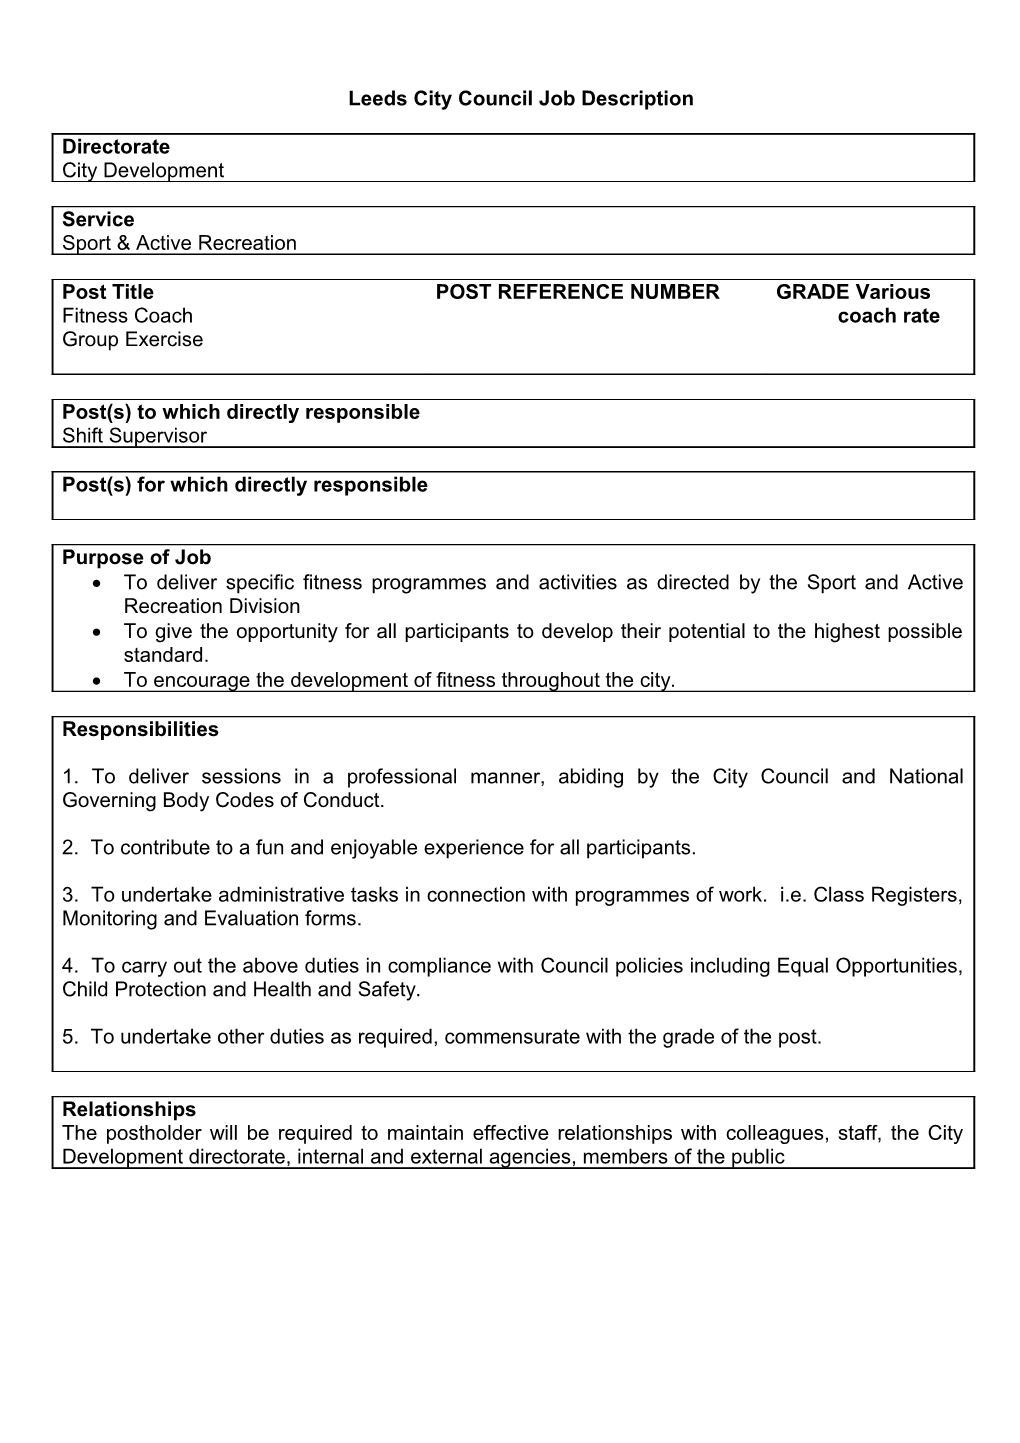 Leeds City Council Job Description